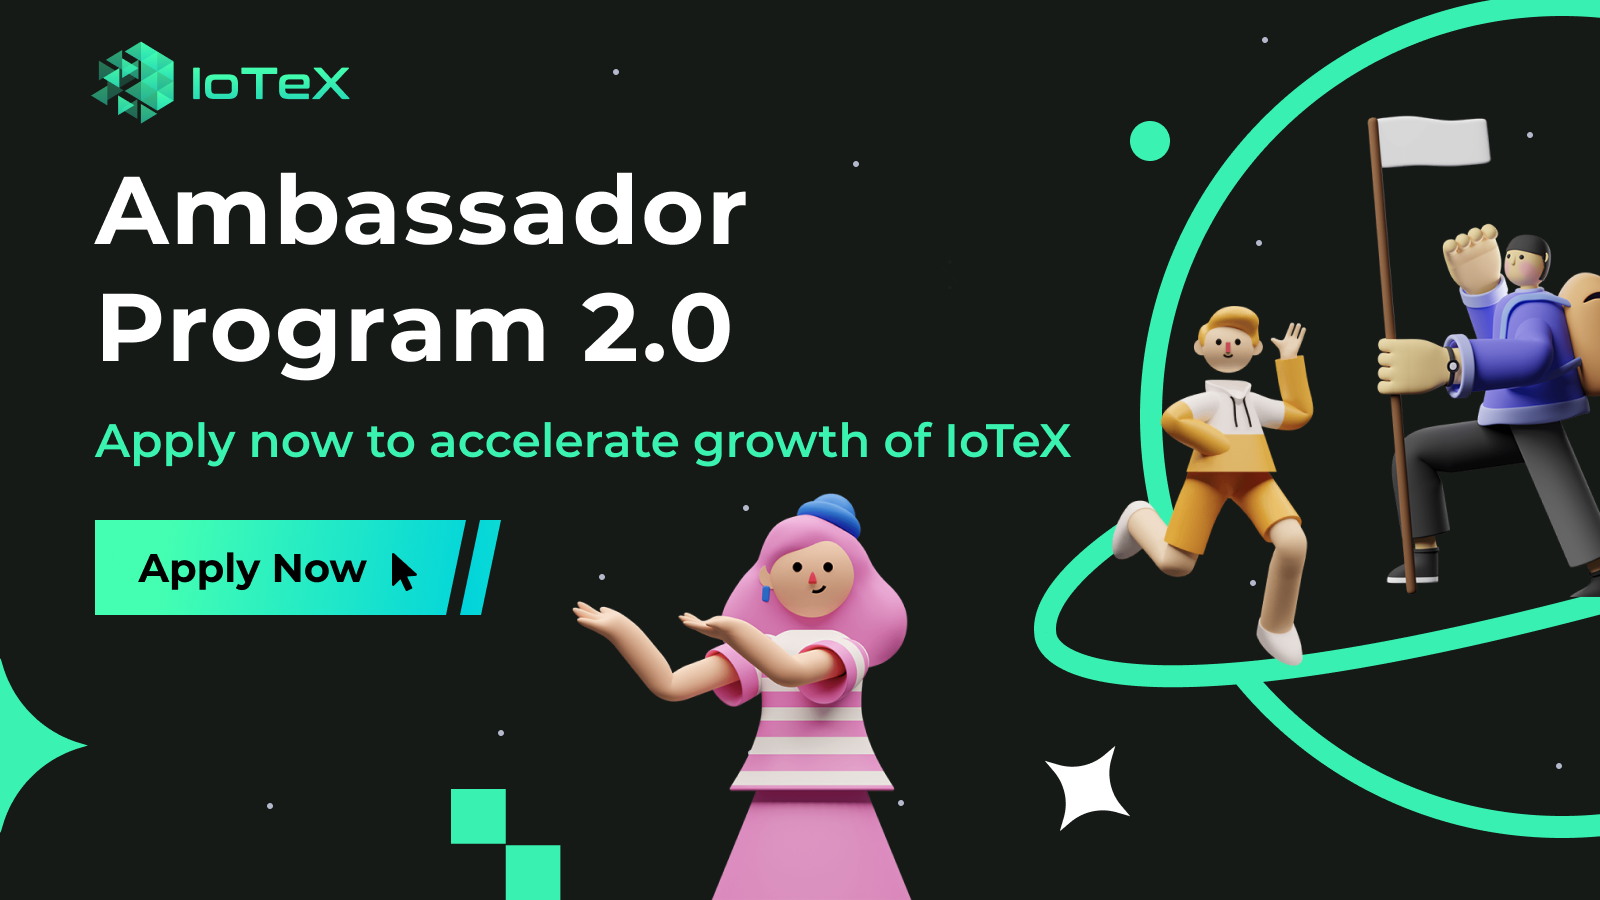 IoTeX Ambassador Program 2.0